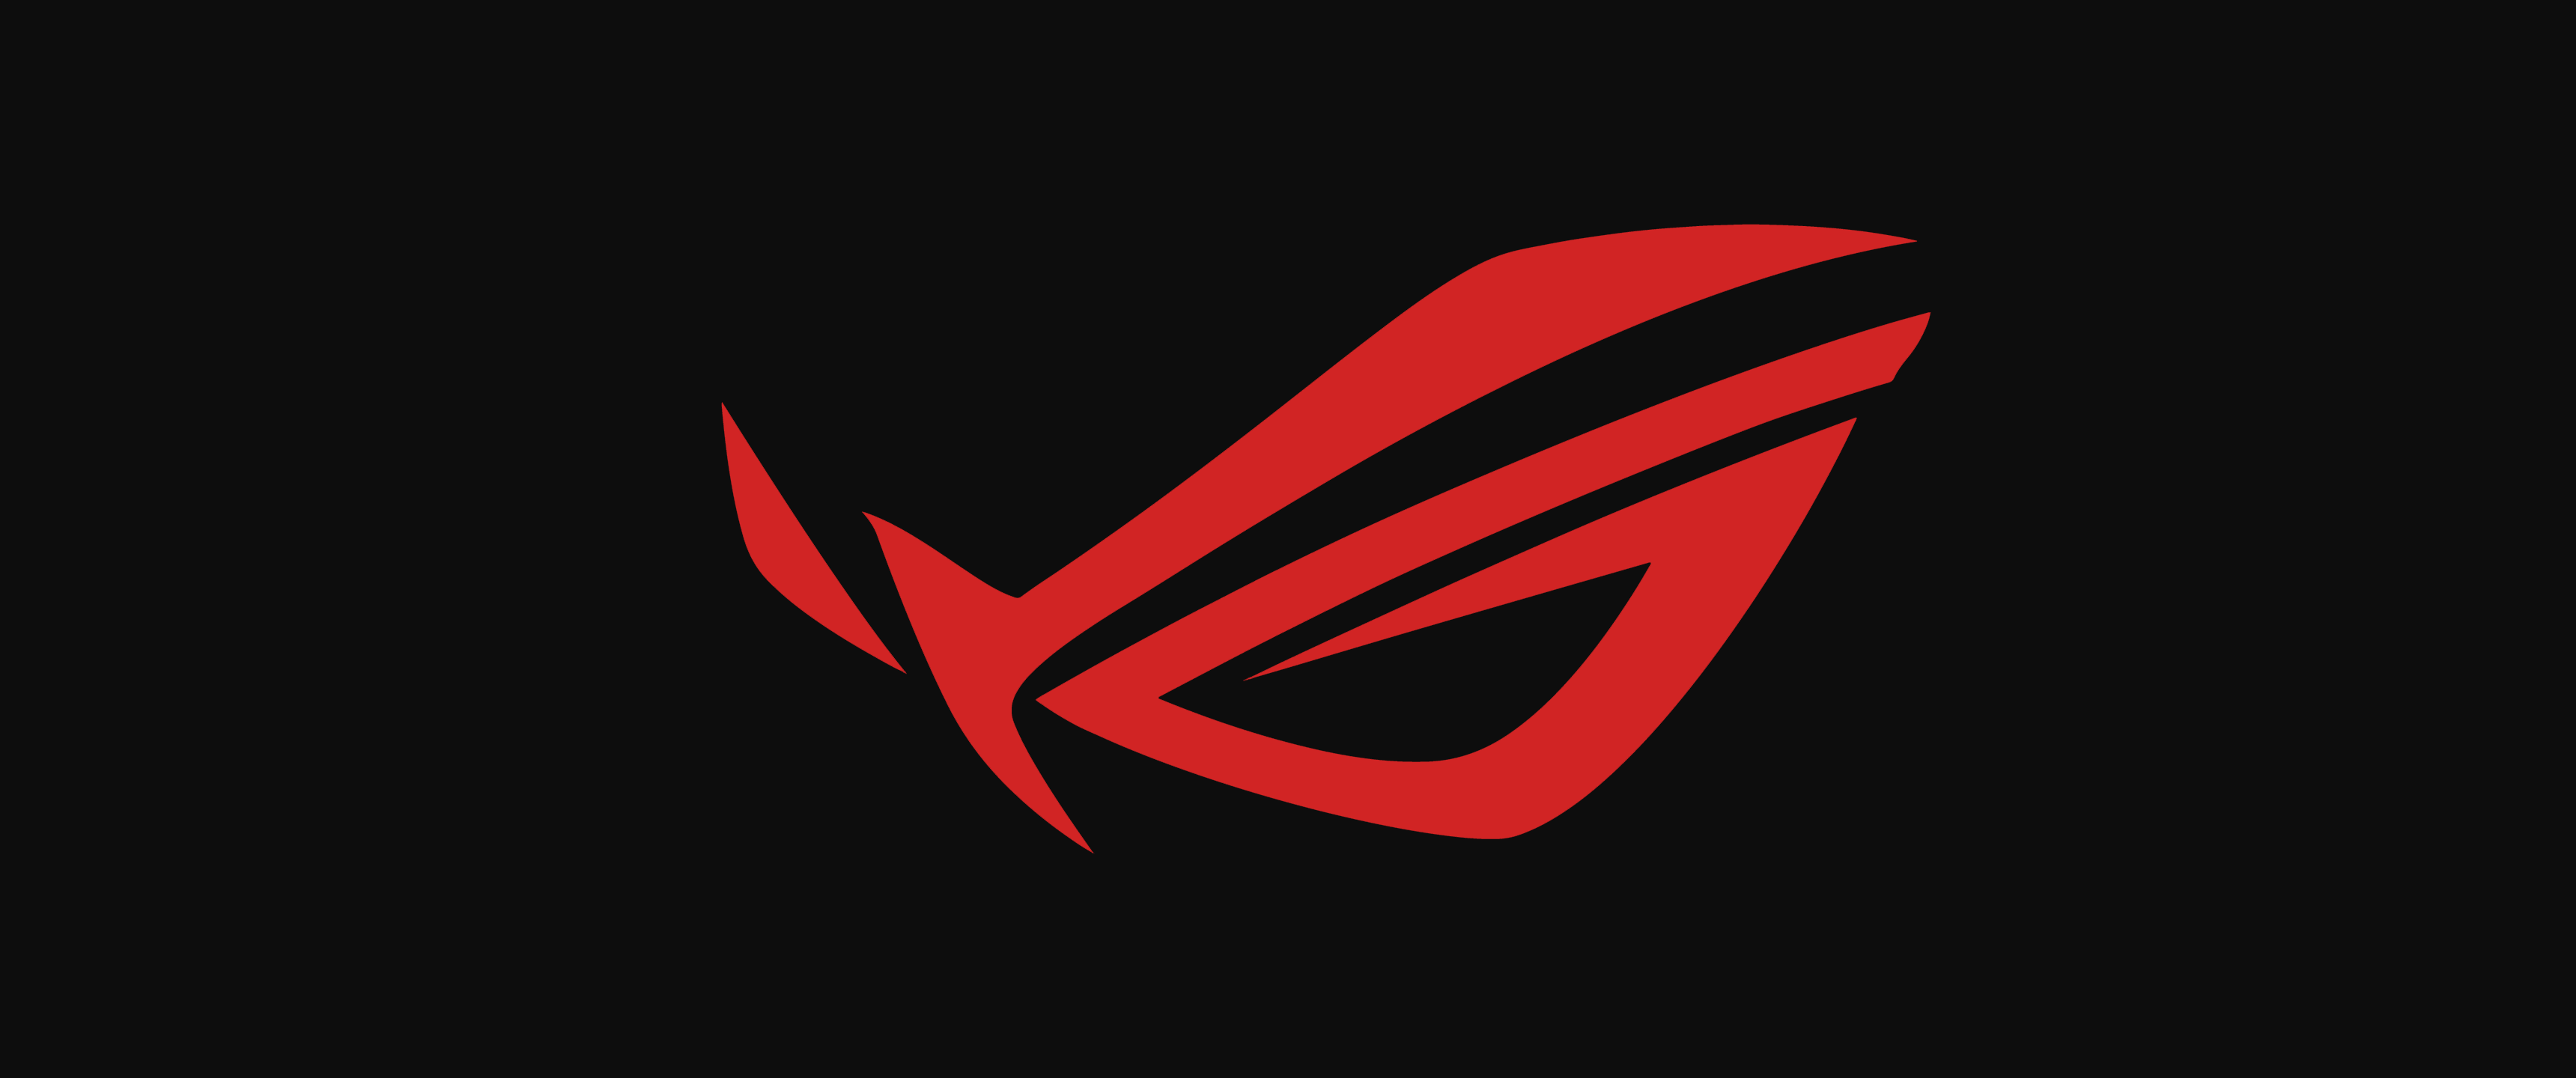 Asus ROG Logo - Minimalistic ASUS ROG logo - Album on Imgur